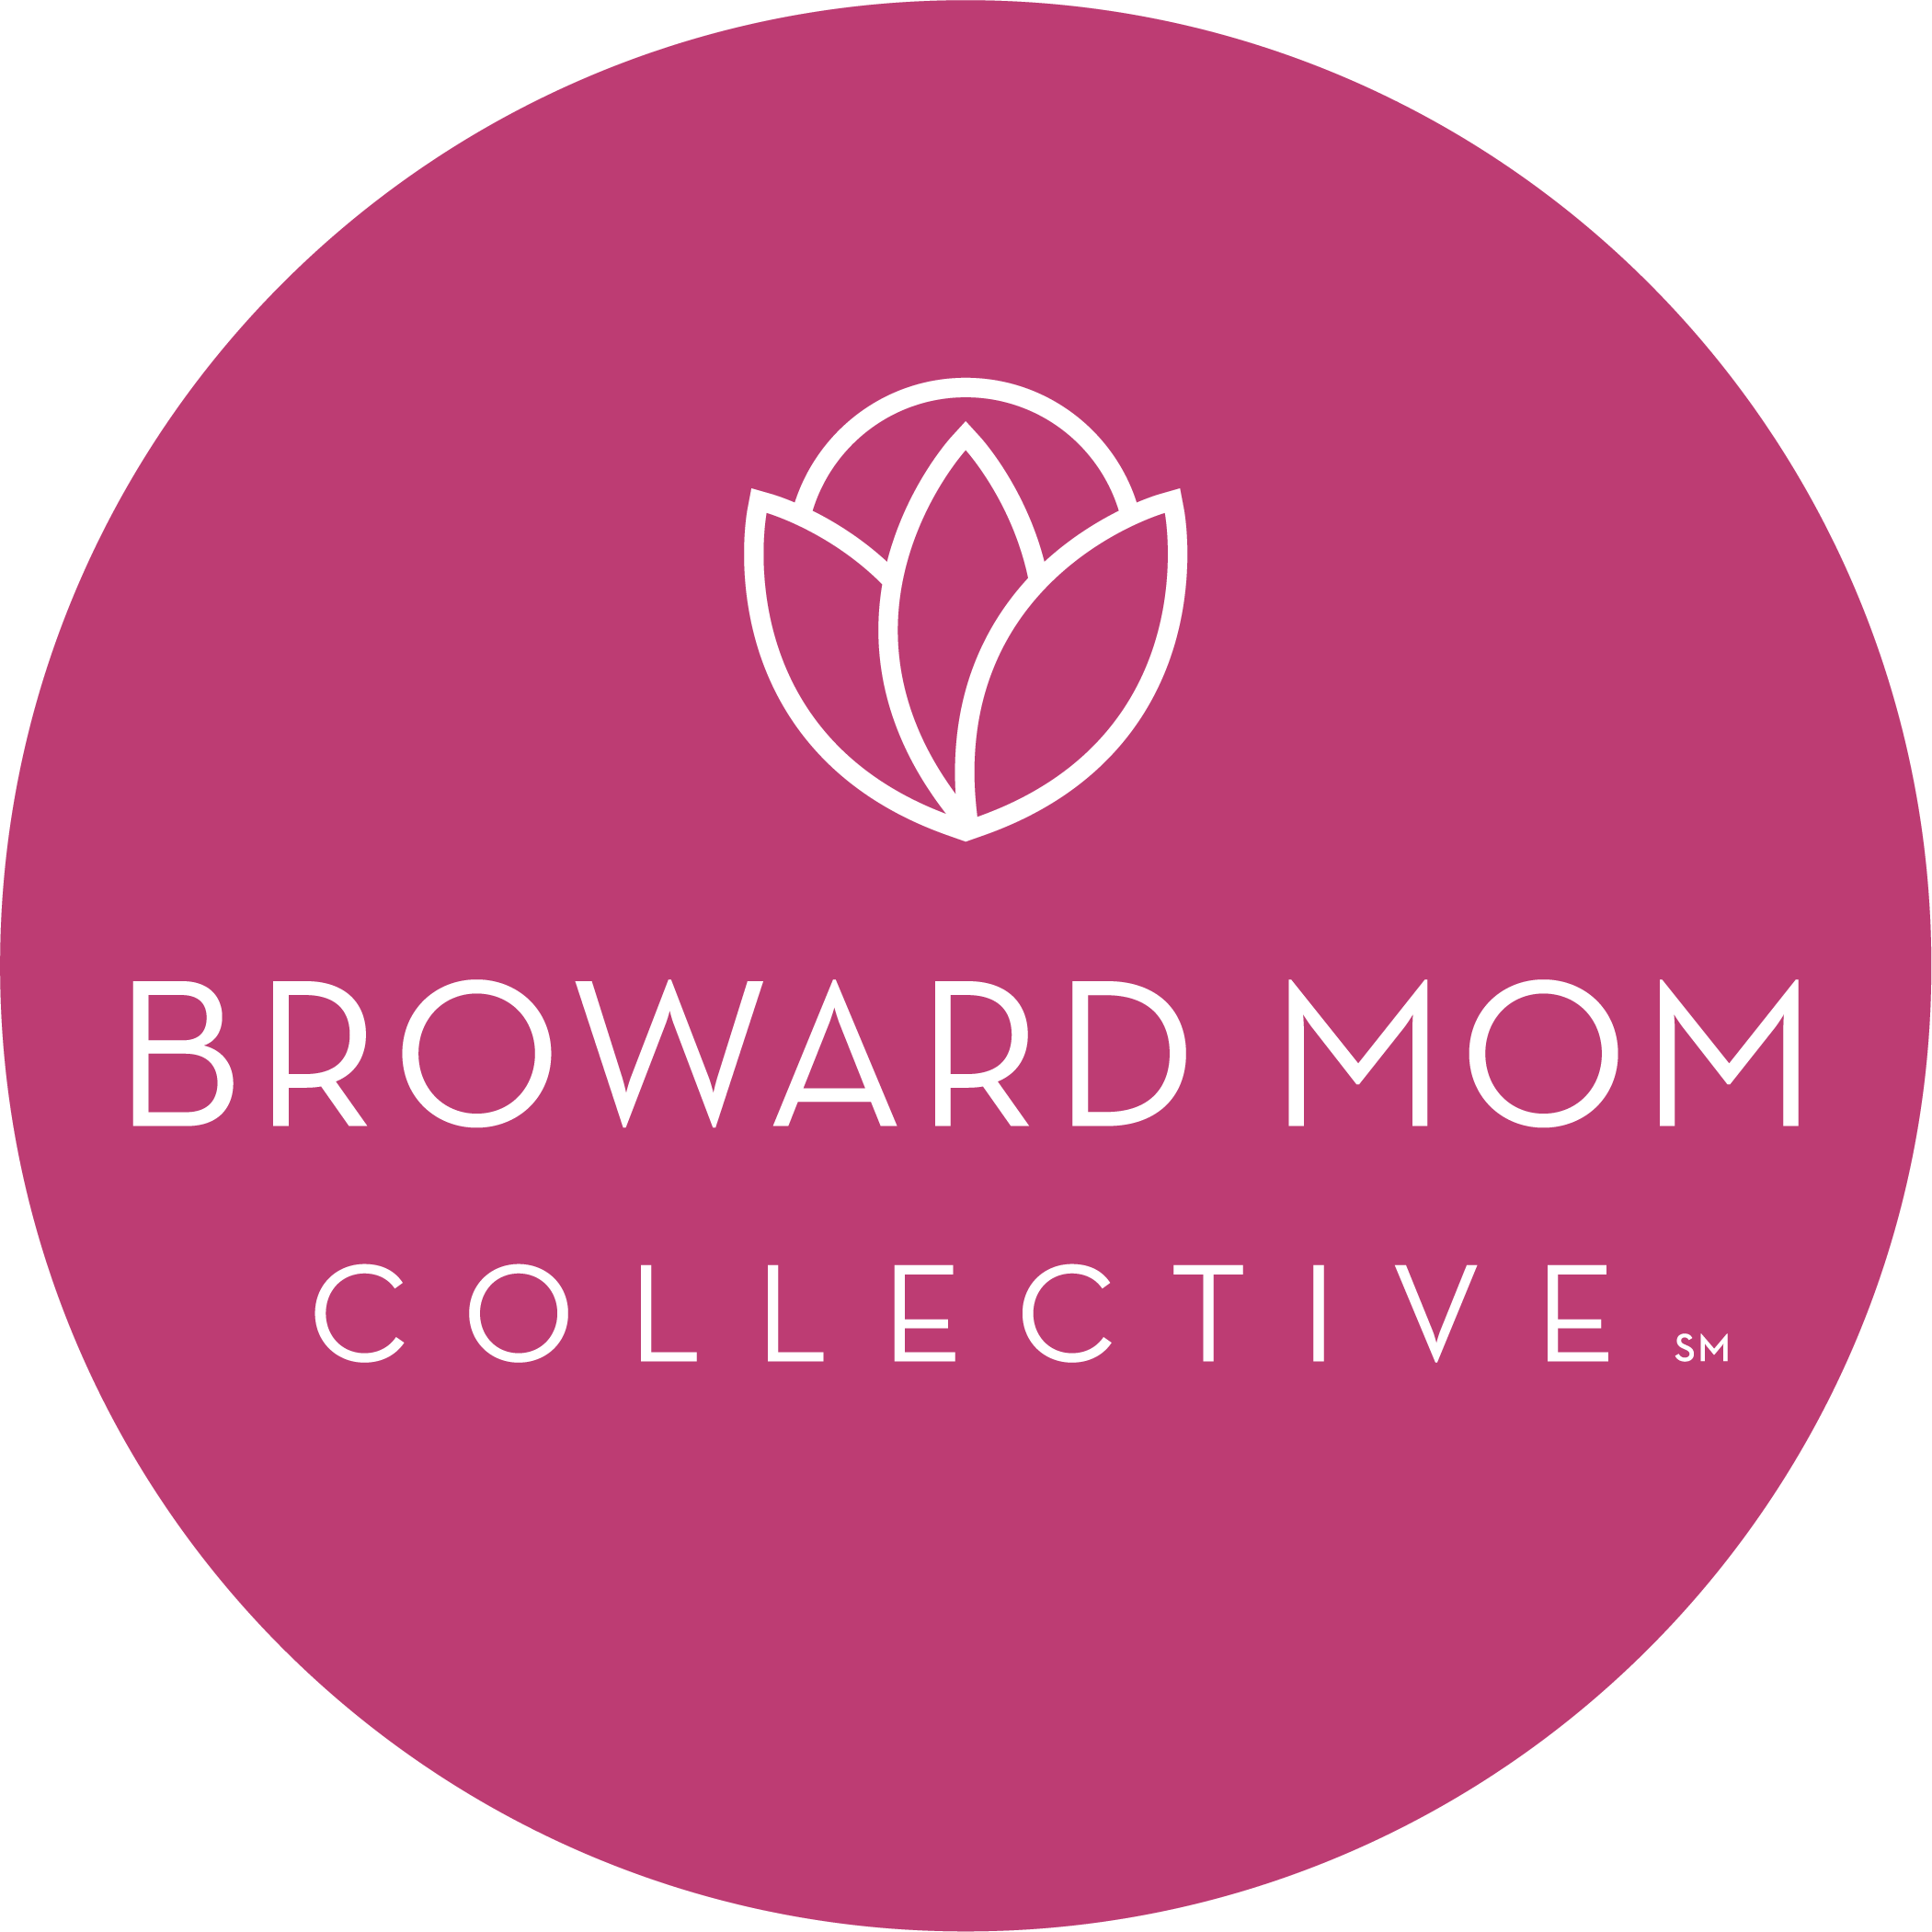 Broward Mom Collective